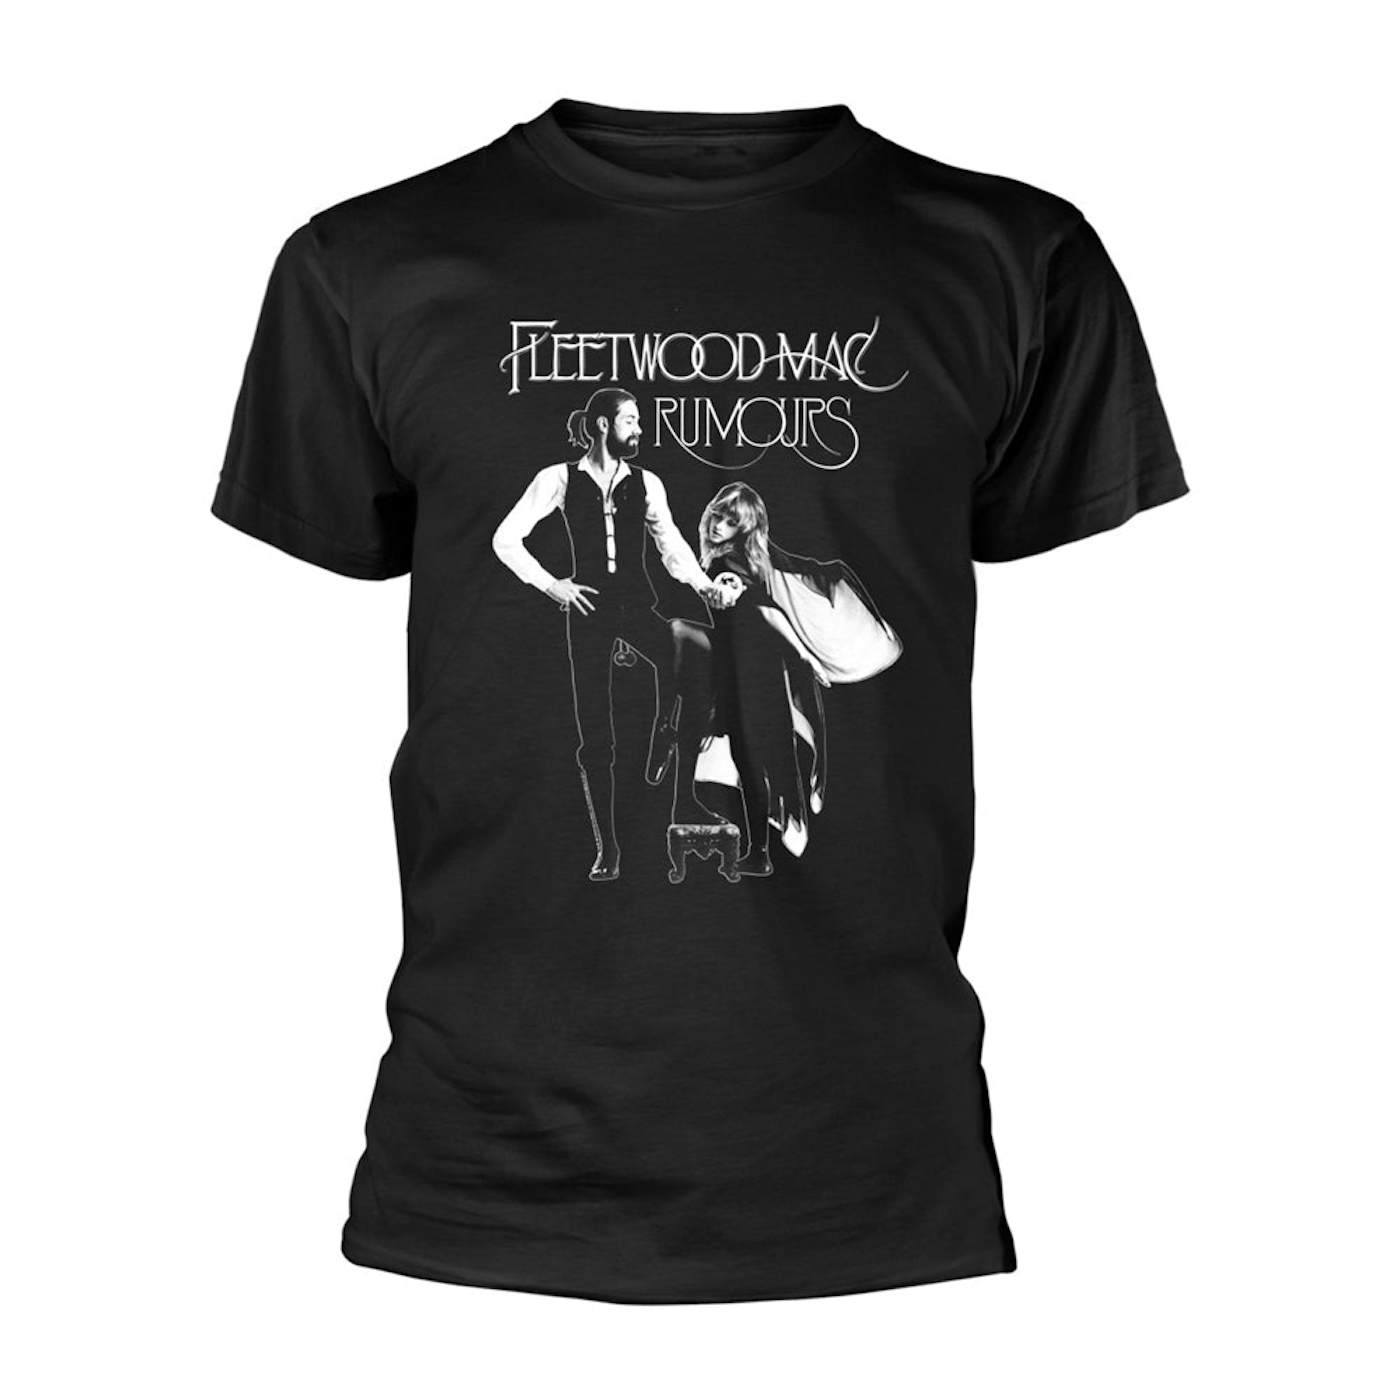 Fleetwood Mac T Shirt - Rumours (Black)